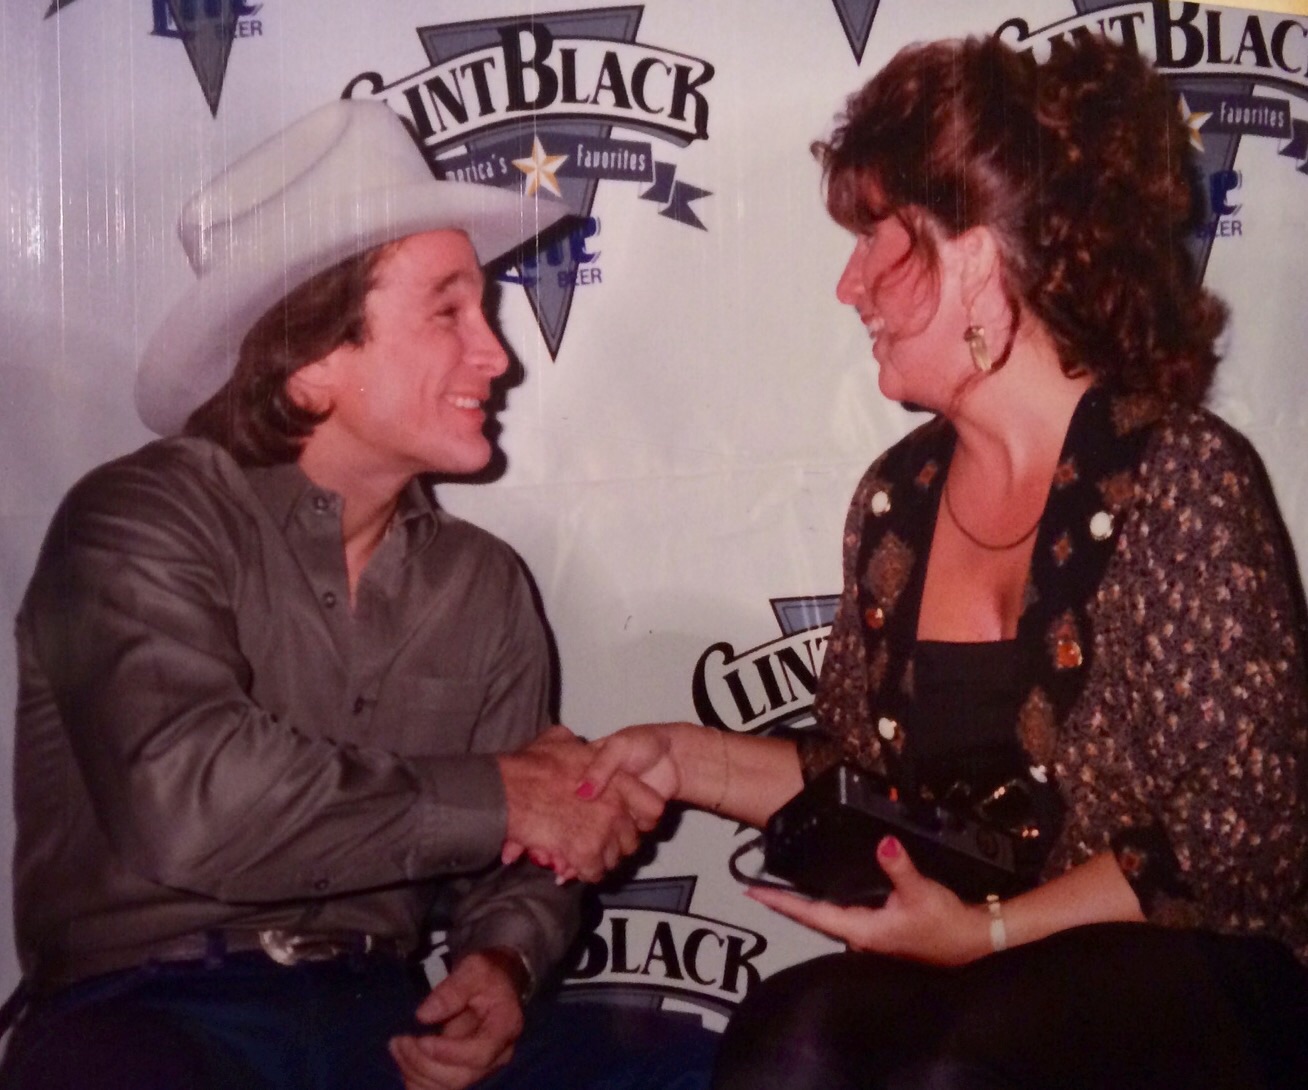 Entertainment reporter Kim Leslie interviews Country Music Star Clint Black.